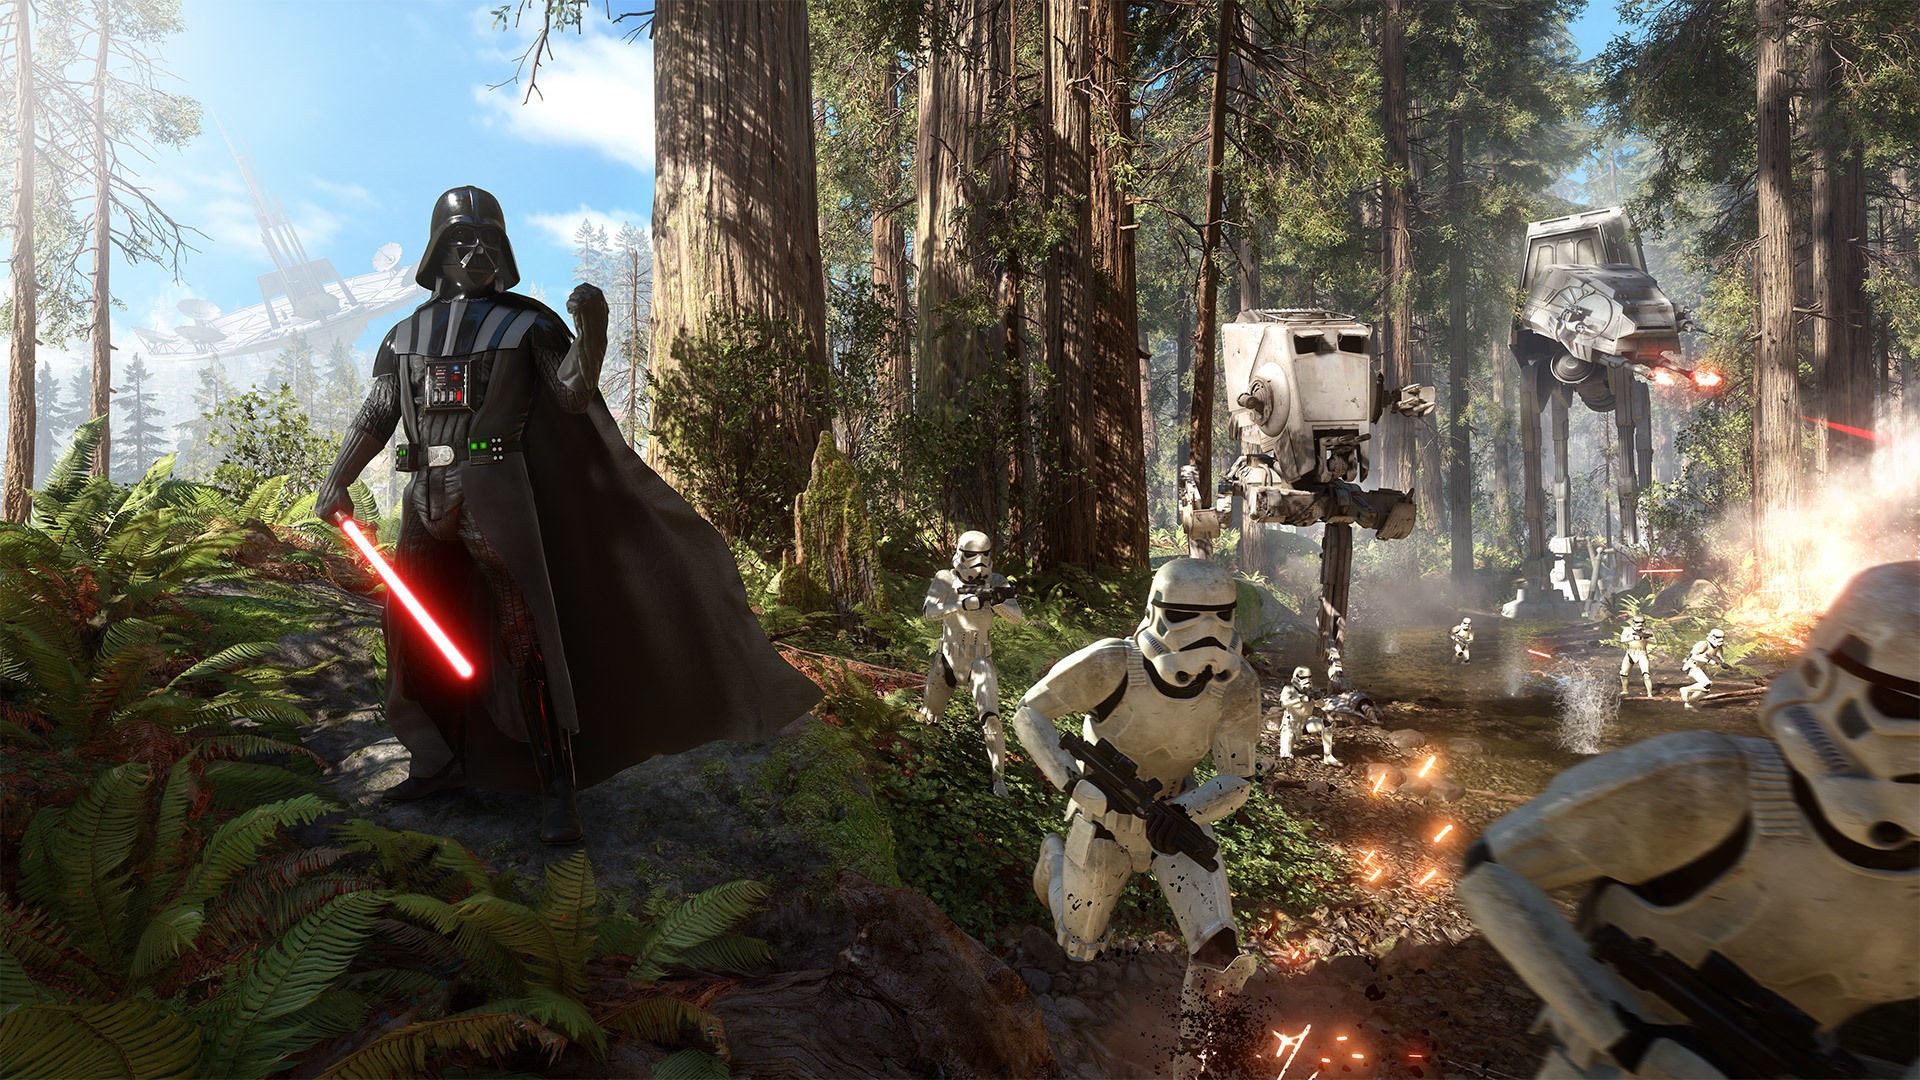 Star Wars Star Wars Battlefront Darth Vader Stormtrooper Galactic Empire Video Games EA DiCE AT ST A 1920x1080